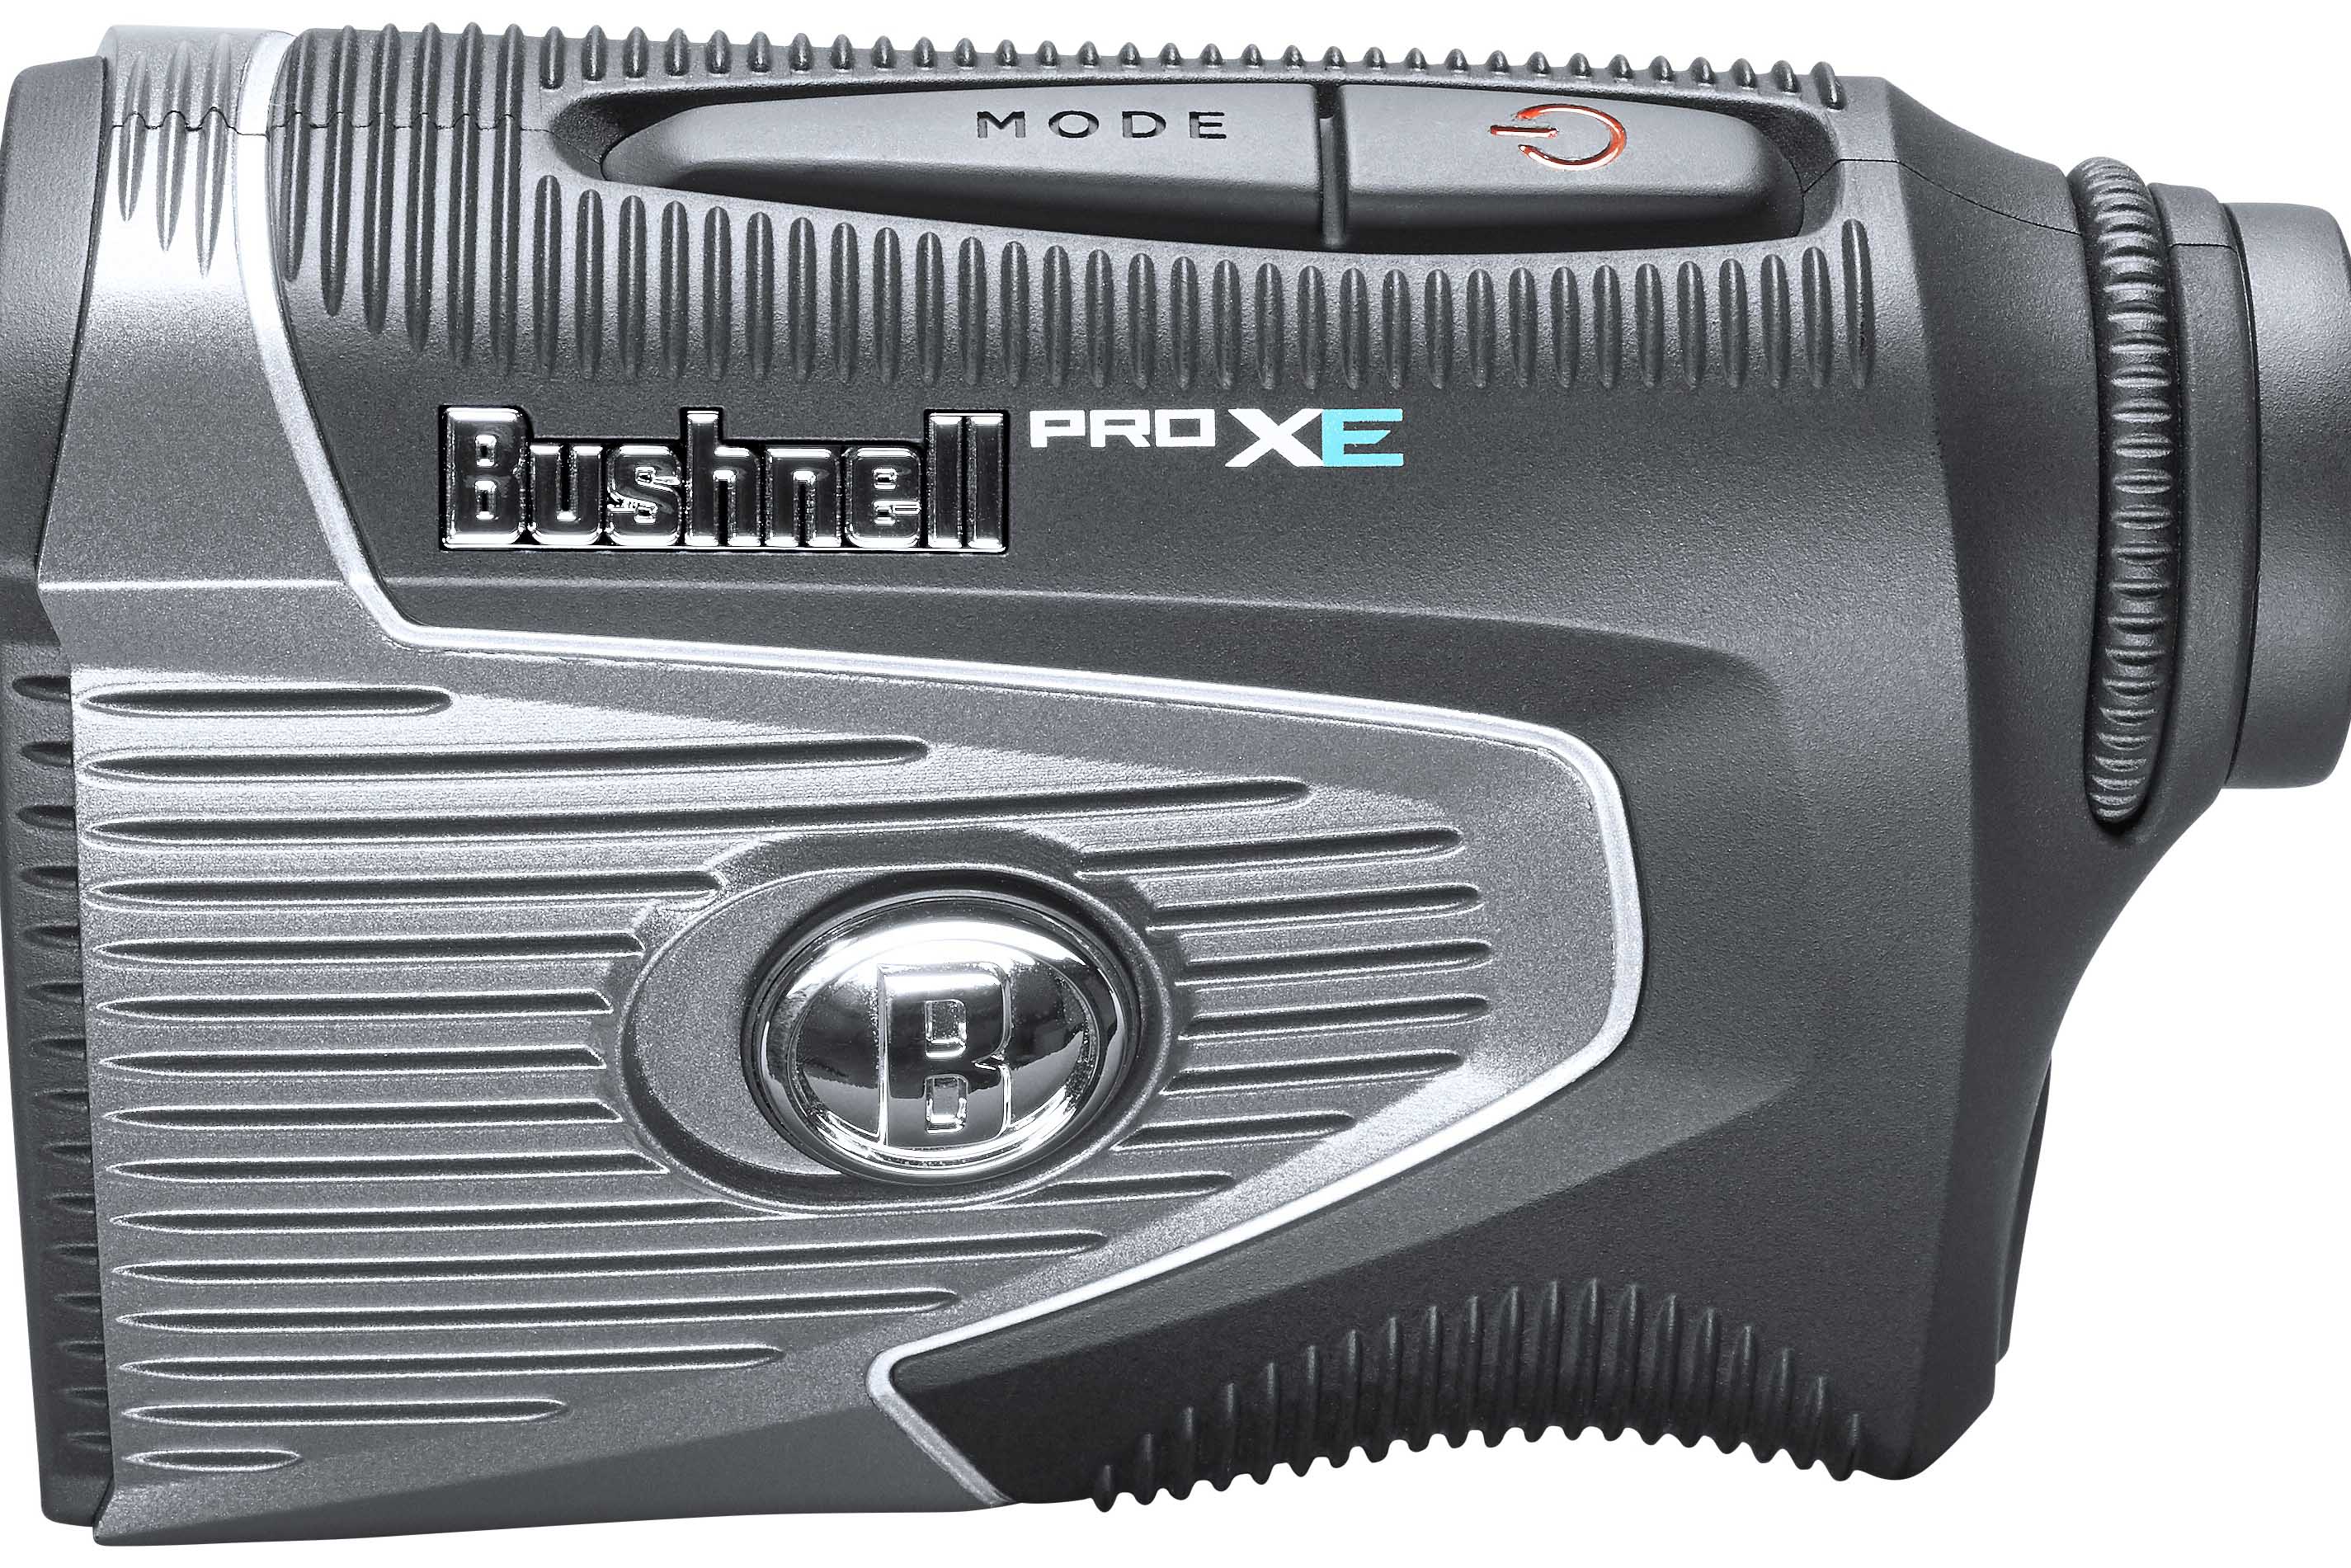 Bushnell Pro XE laser review